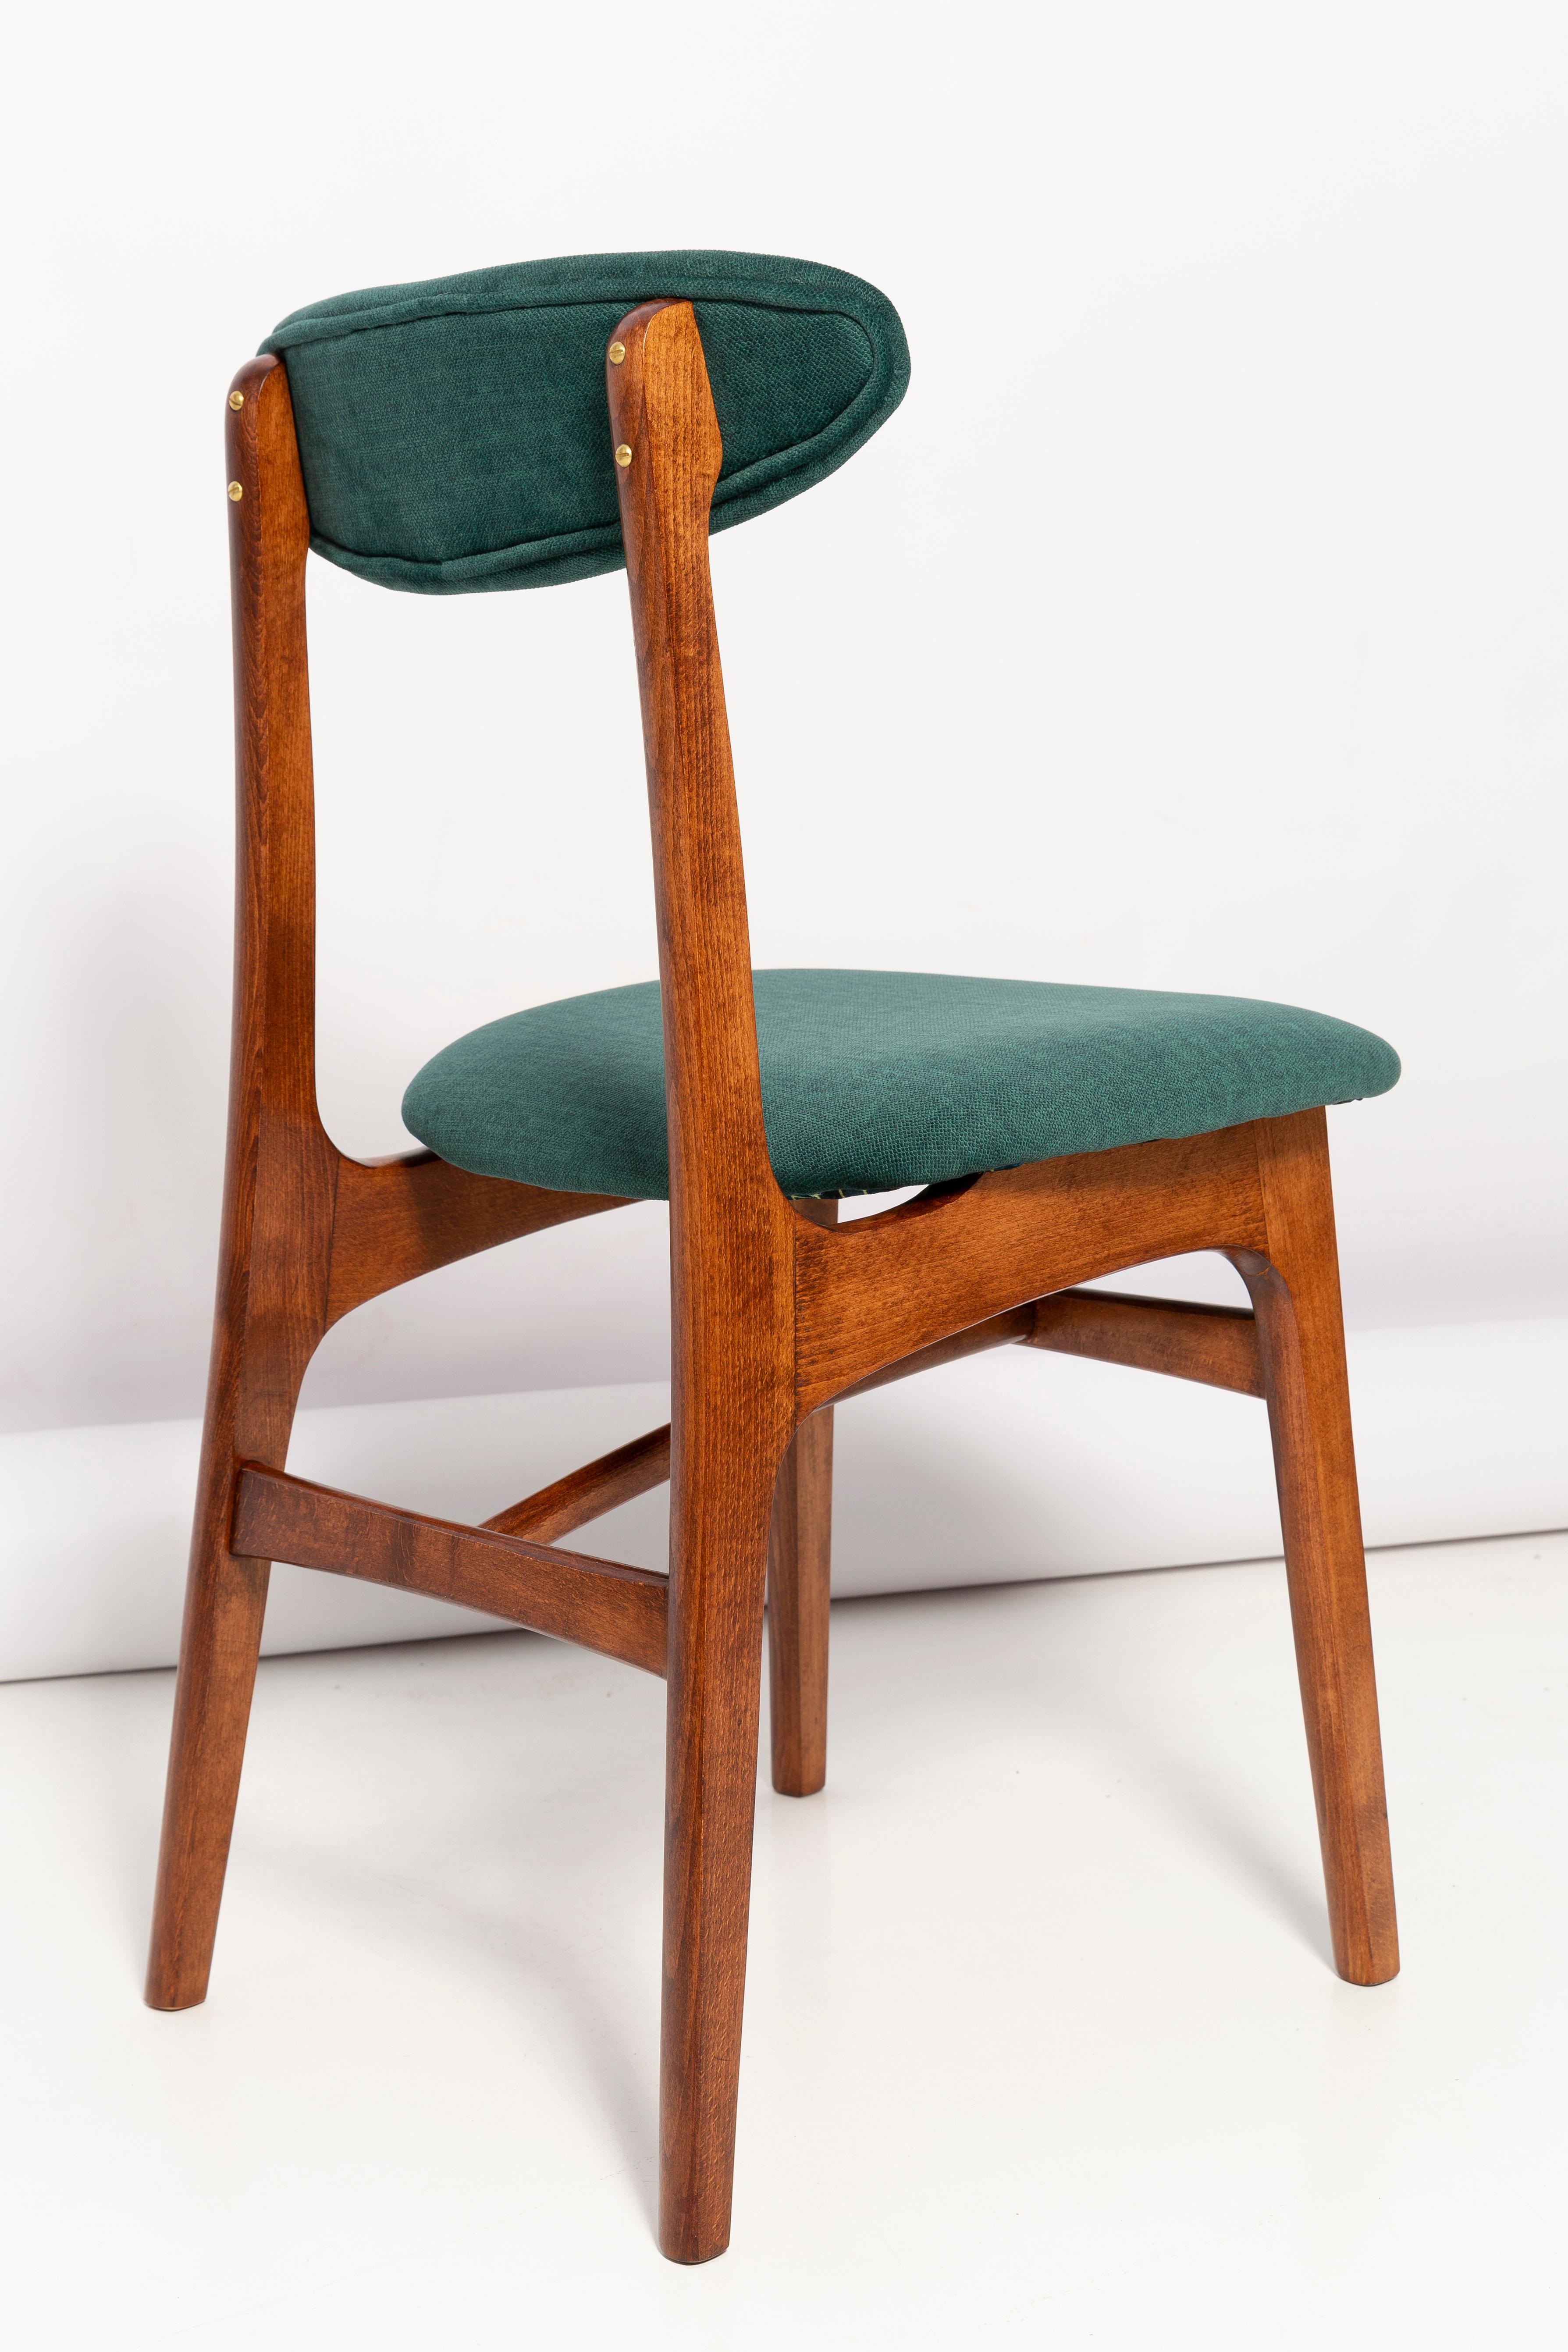 20th Century Mid Century Green Velvet Chair Designed by Rajmund Halas, Poland, 1960s For Sale